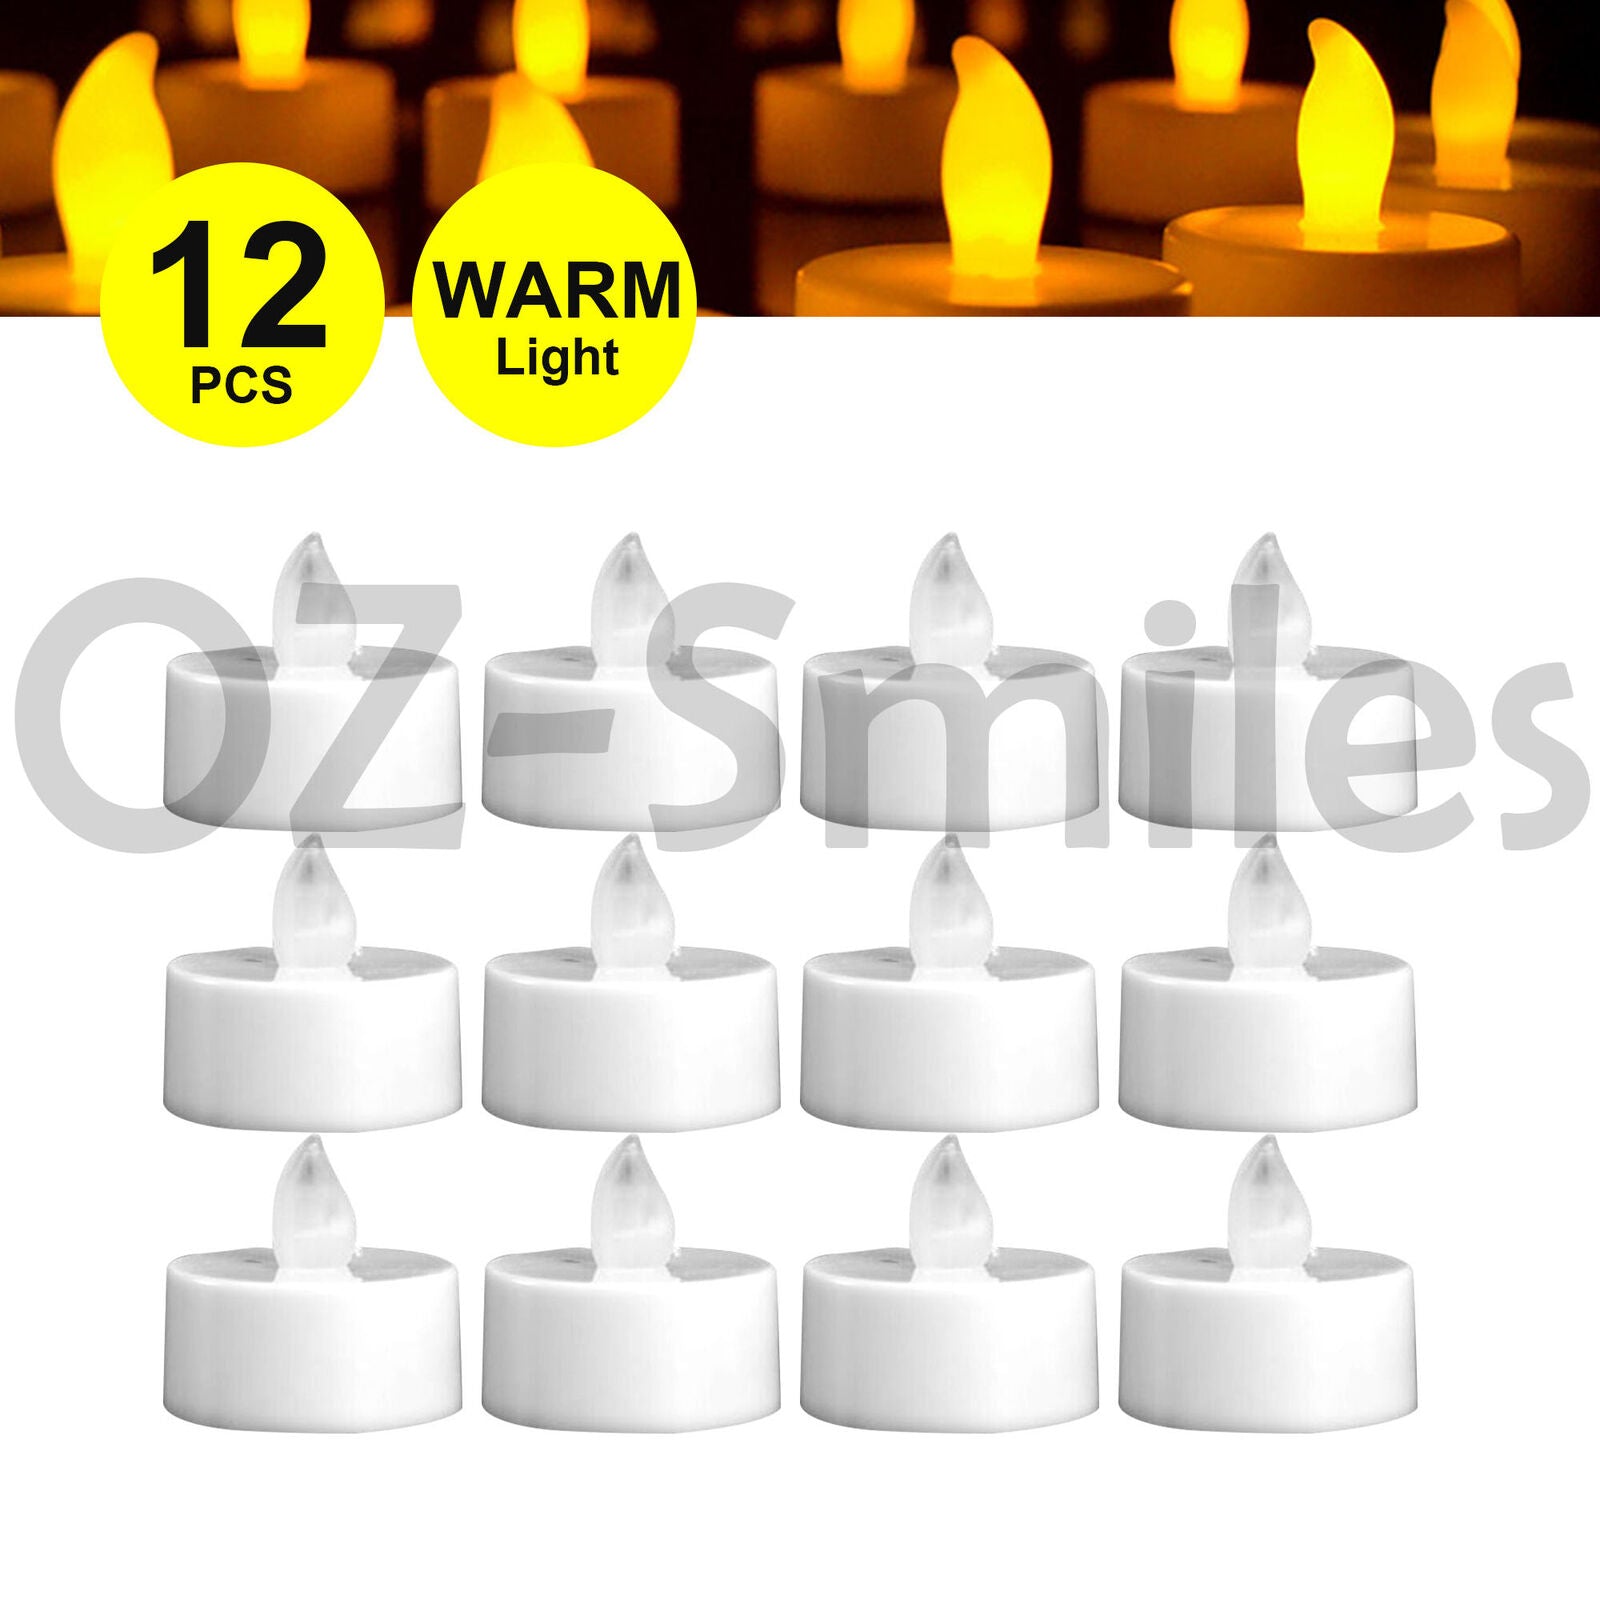 12pcs LED Tealight candles